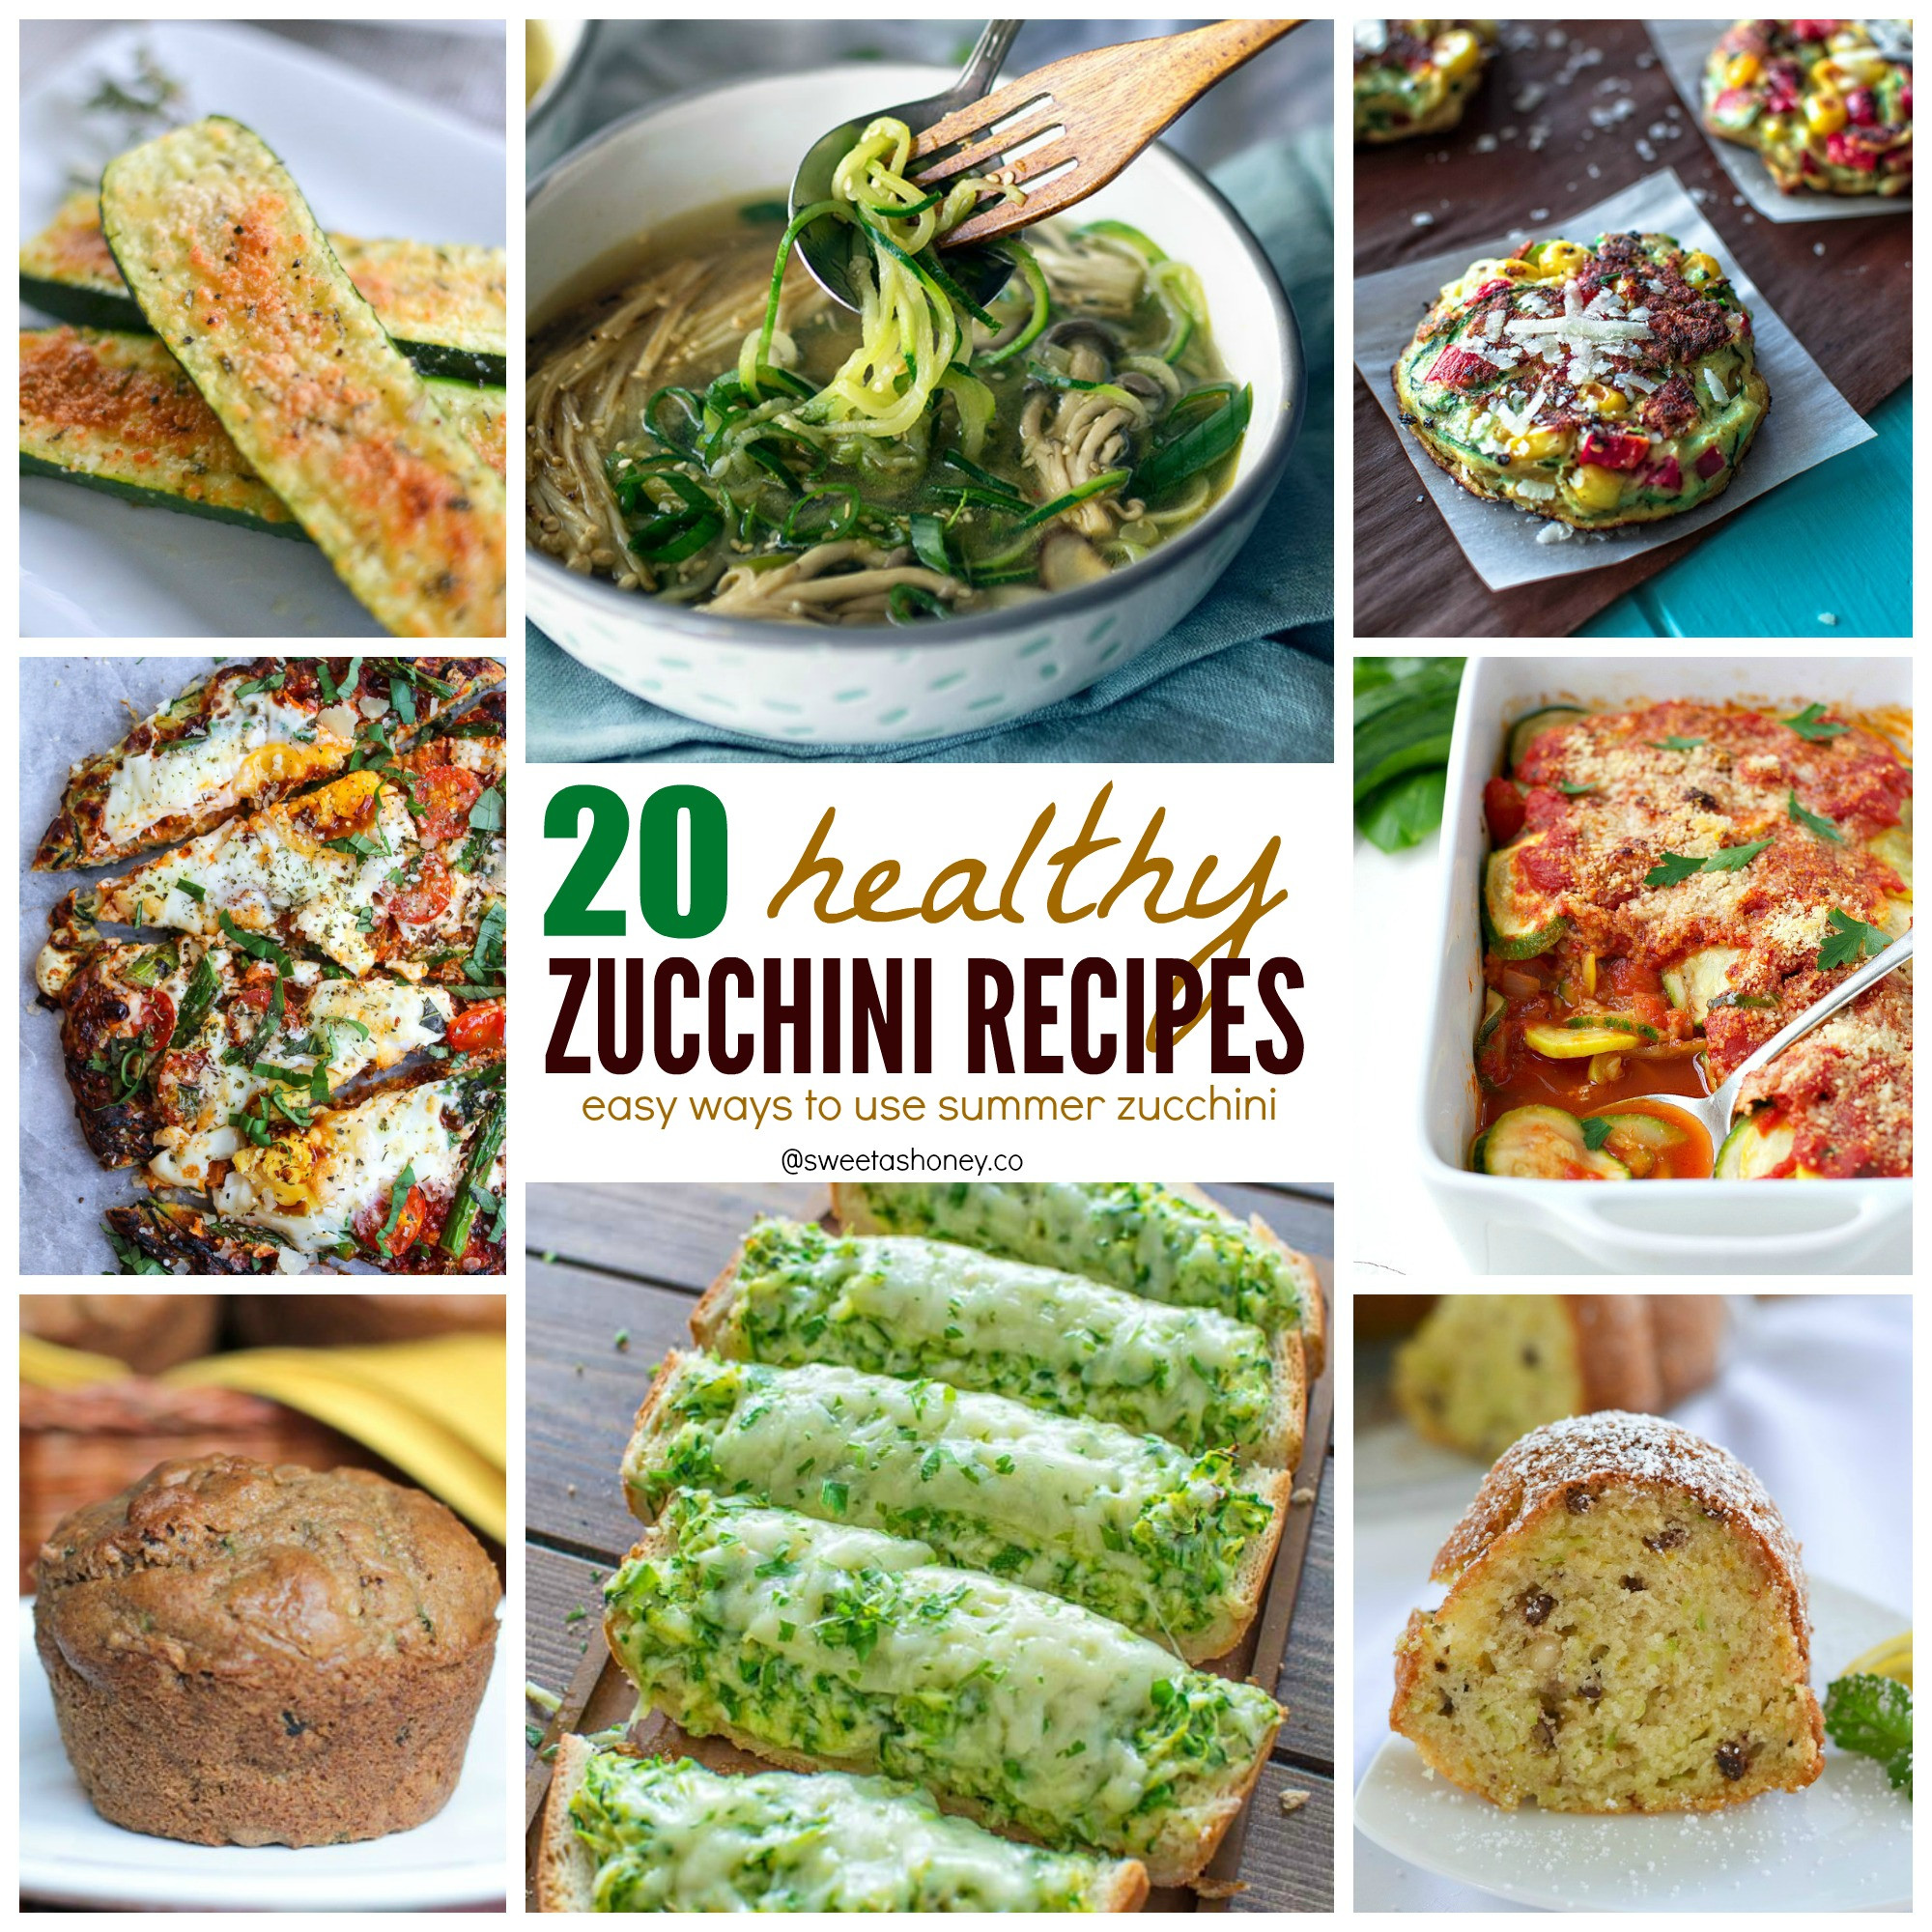 Zucchini Recipes Healthy
 Healthy Zucchini Recipes 20 Easy Ways to Use Zucchini